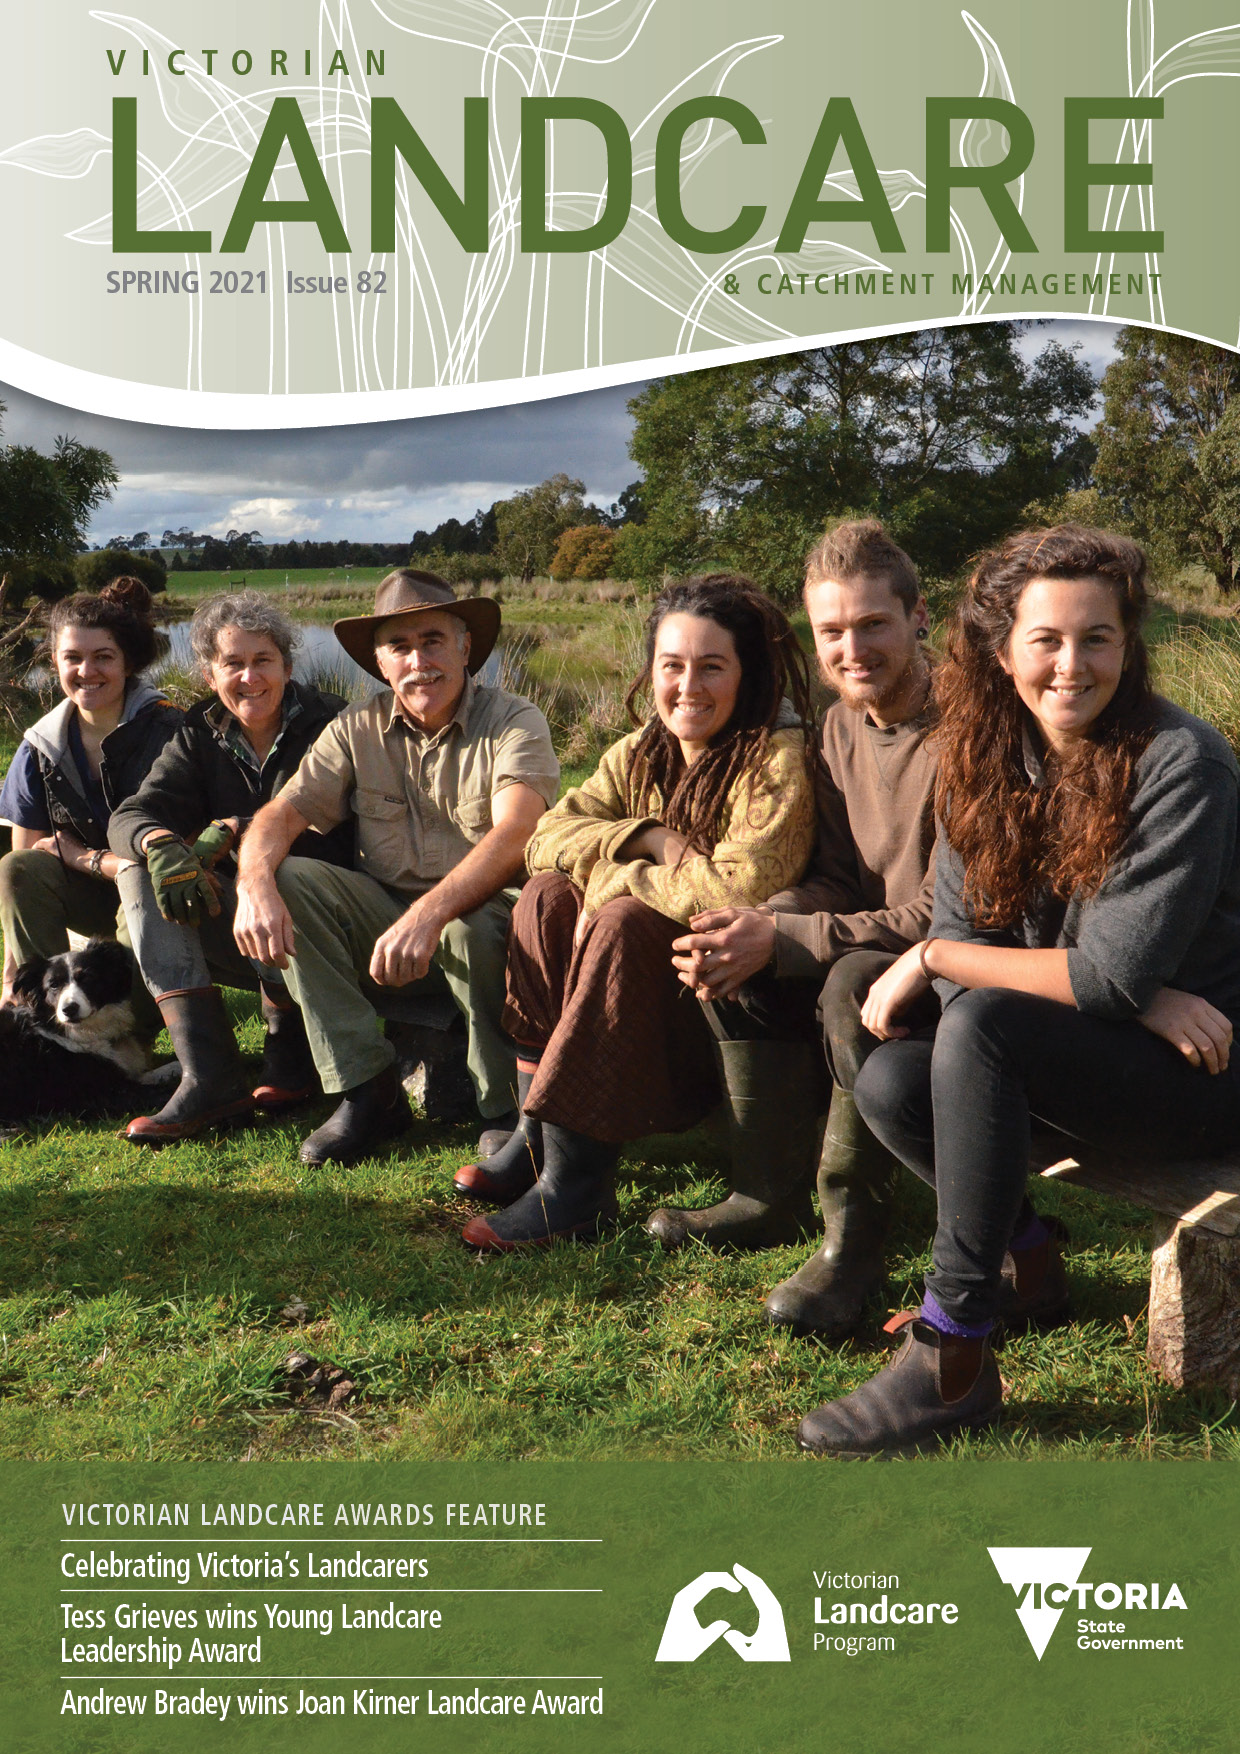 Victorian Landcare magazine Spring 2021 cover6